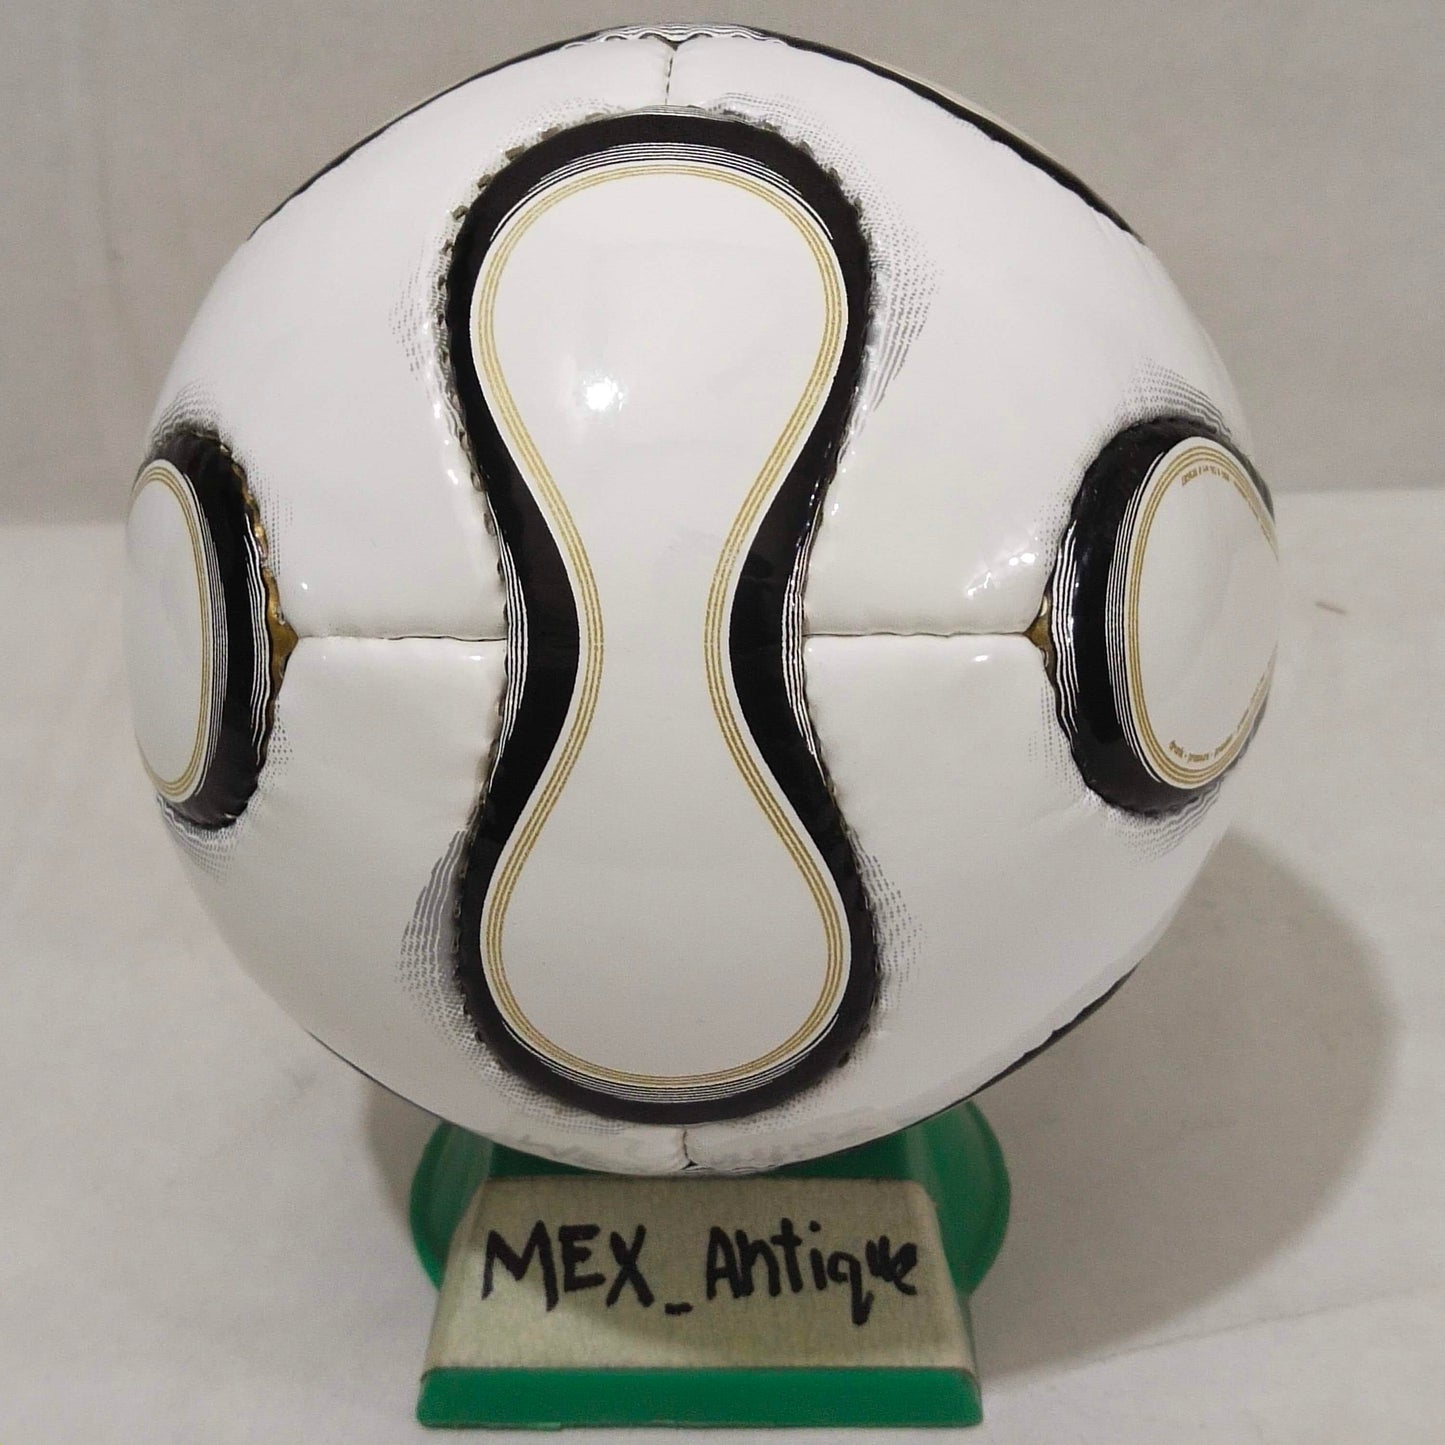 Adidas Teamgeist MINI Ball | 2006 FIFA World Cup Ball 05